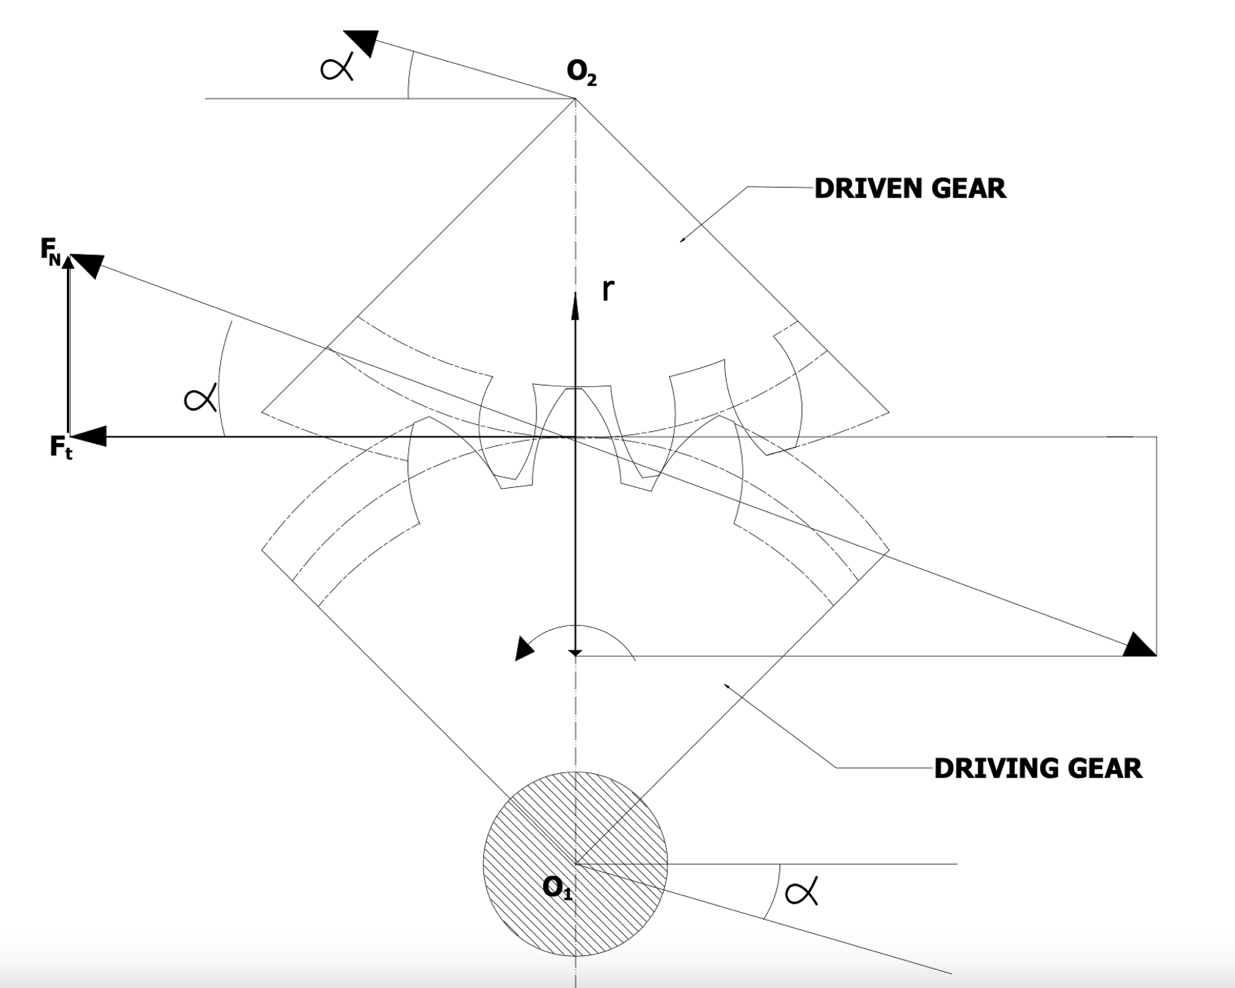 Figure 1. Gear force illustration.